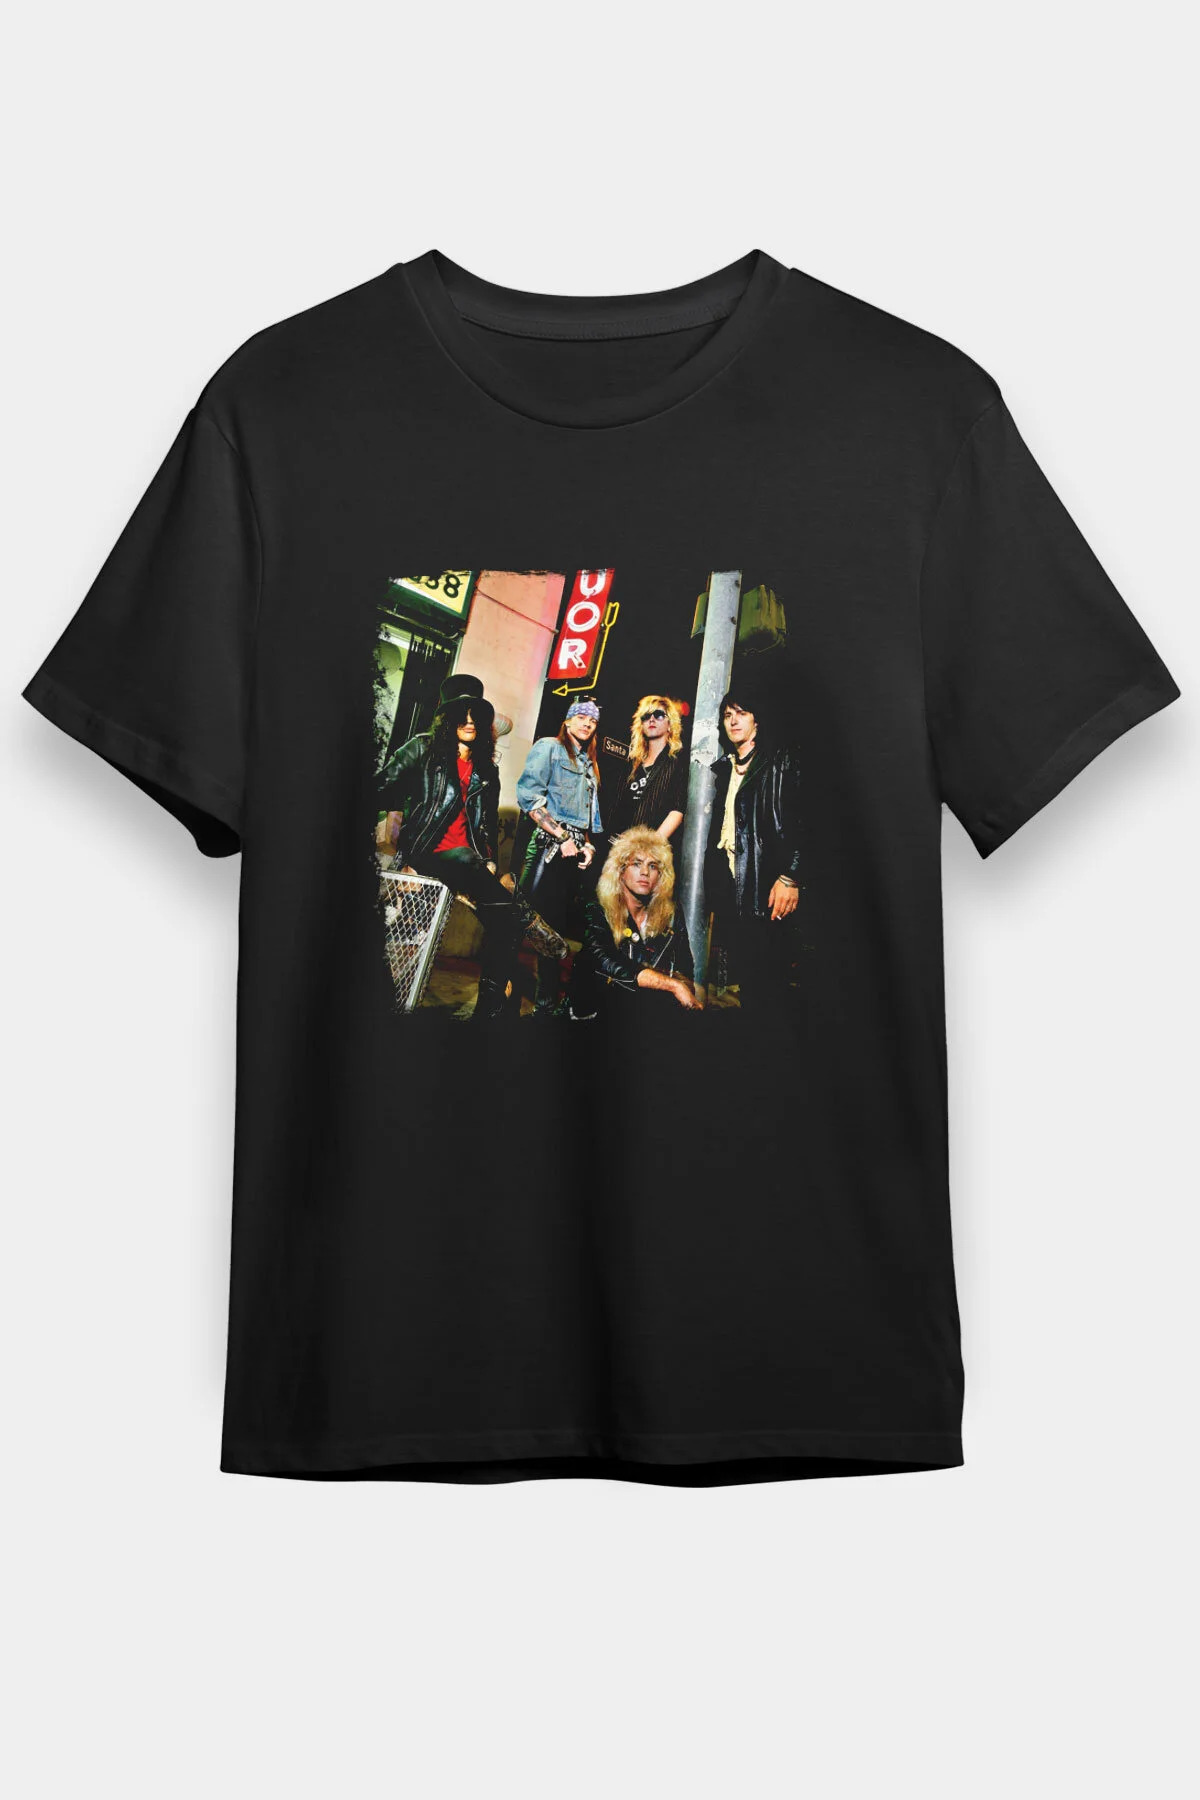 Guns N’ Roses T shirt , Music Band ,Unisex Tshirt  16